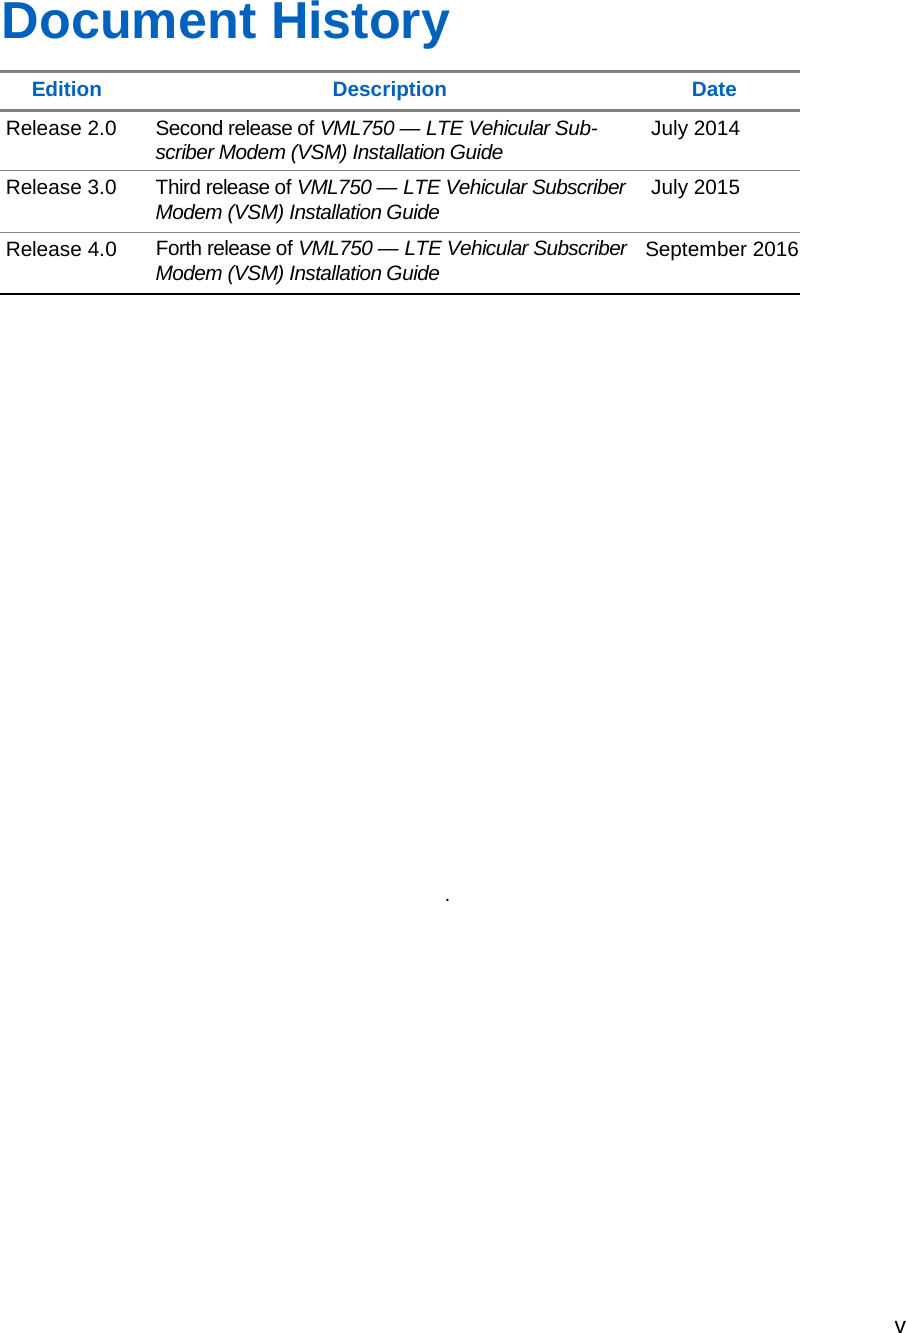 v      Document History  Edition Description Date Release 2.0 Second release of VML750 — LTE Vehicular Sub- scriber Modem (VSM) Installation Guide July 2014 Release 3.0 Third release of VML750 — LTE Vehicular Subscriber Modem (VSM) Installation Guide July 2015 Release 4.0 Forth release of VML750 — LTE Vehicular Subscriber Modem (VSM) Installation Guide September 2016                         .   